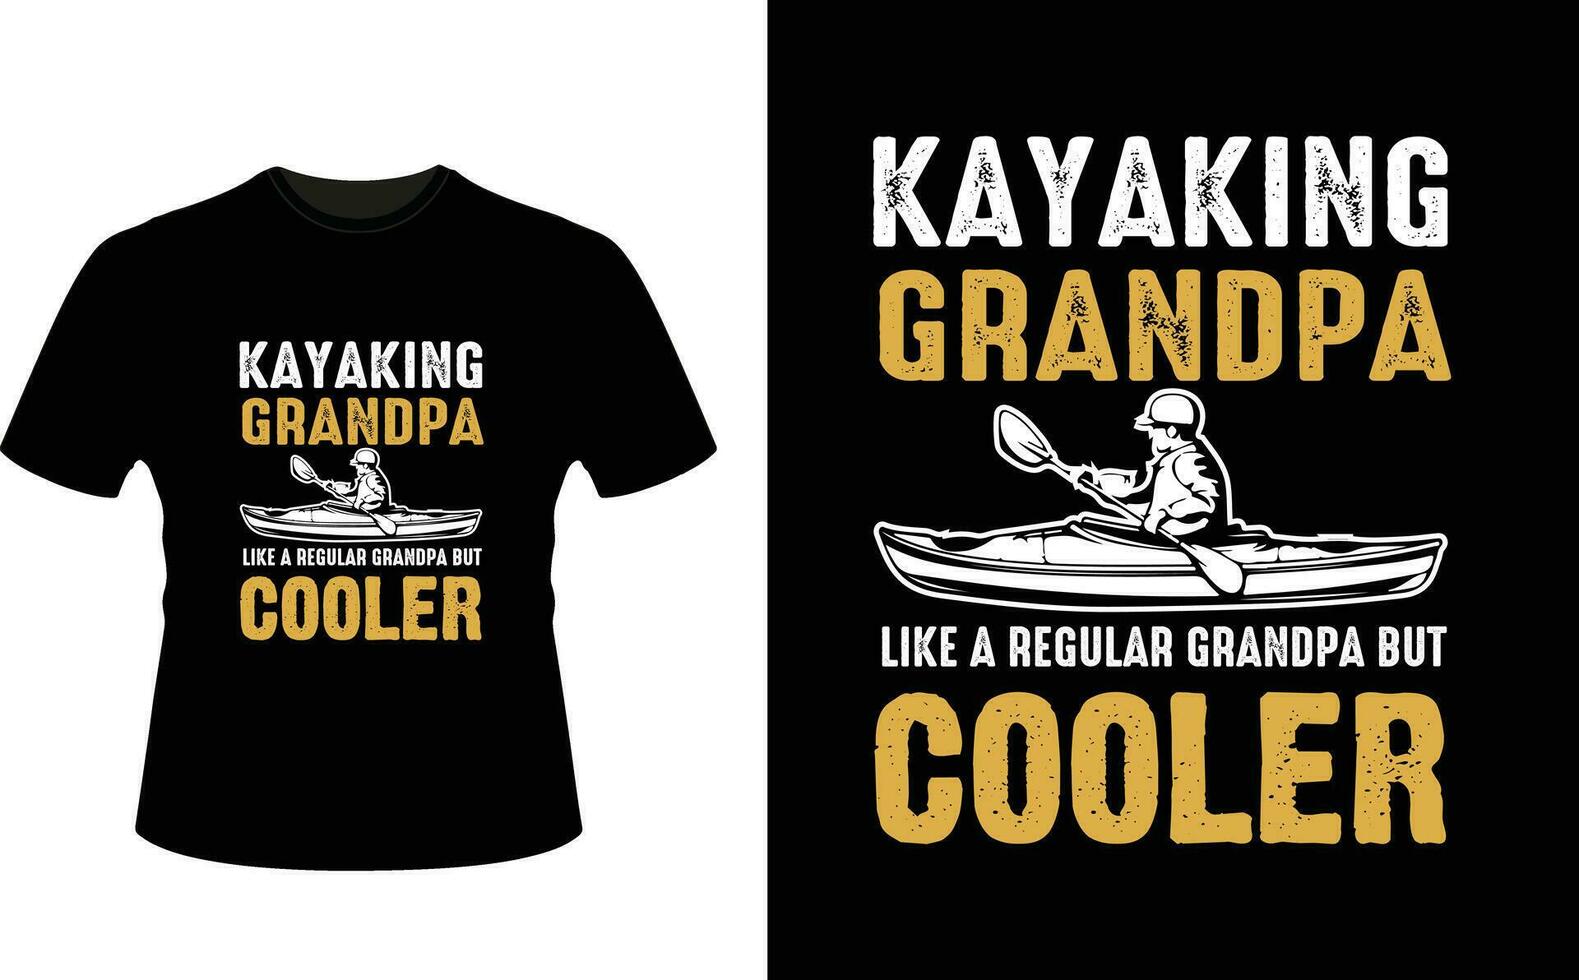 Kayaking Grandpa Like a Regular Grandpa But Cooler or Grandfather tshirt design or Grandfather day t shirt Design vector